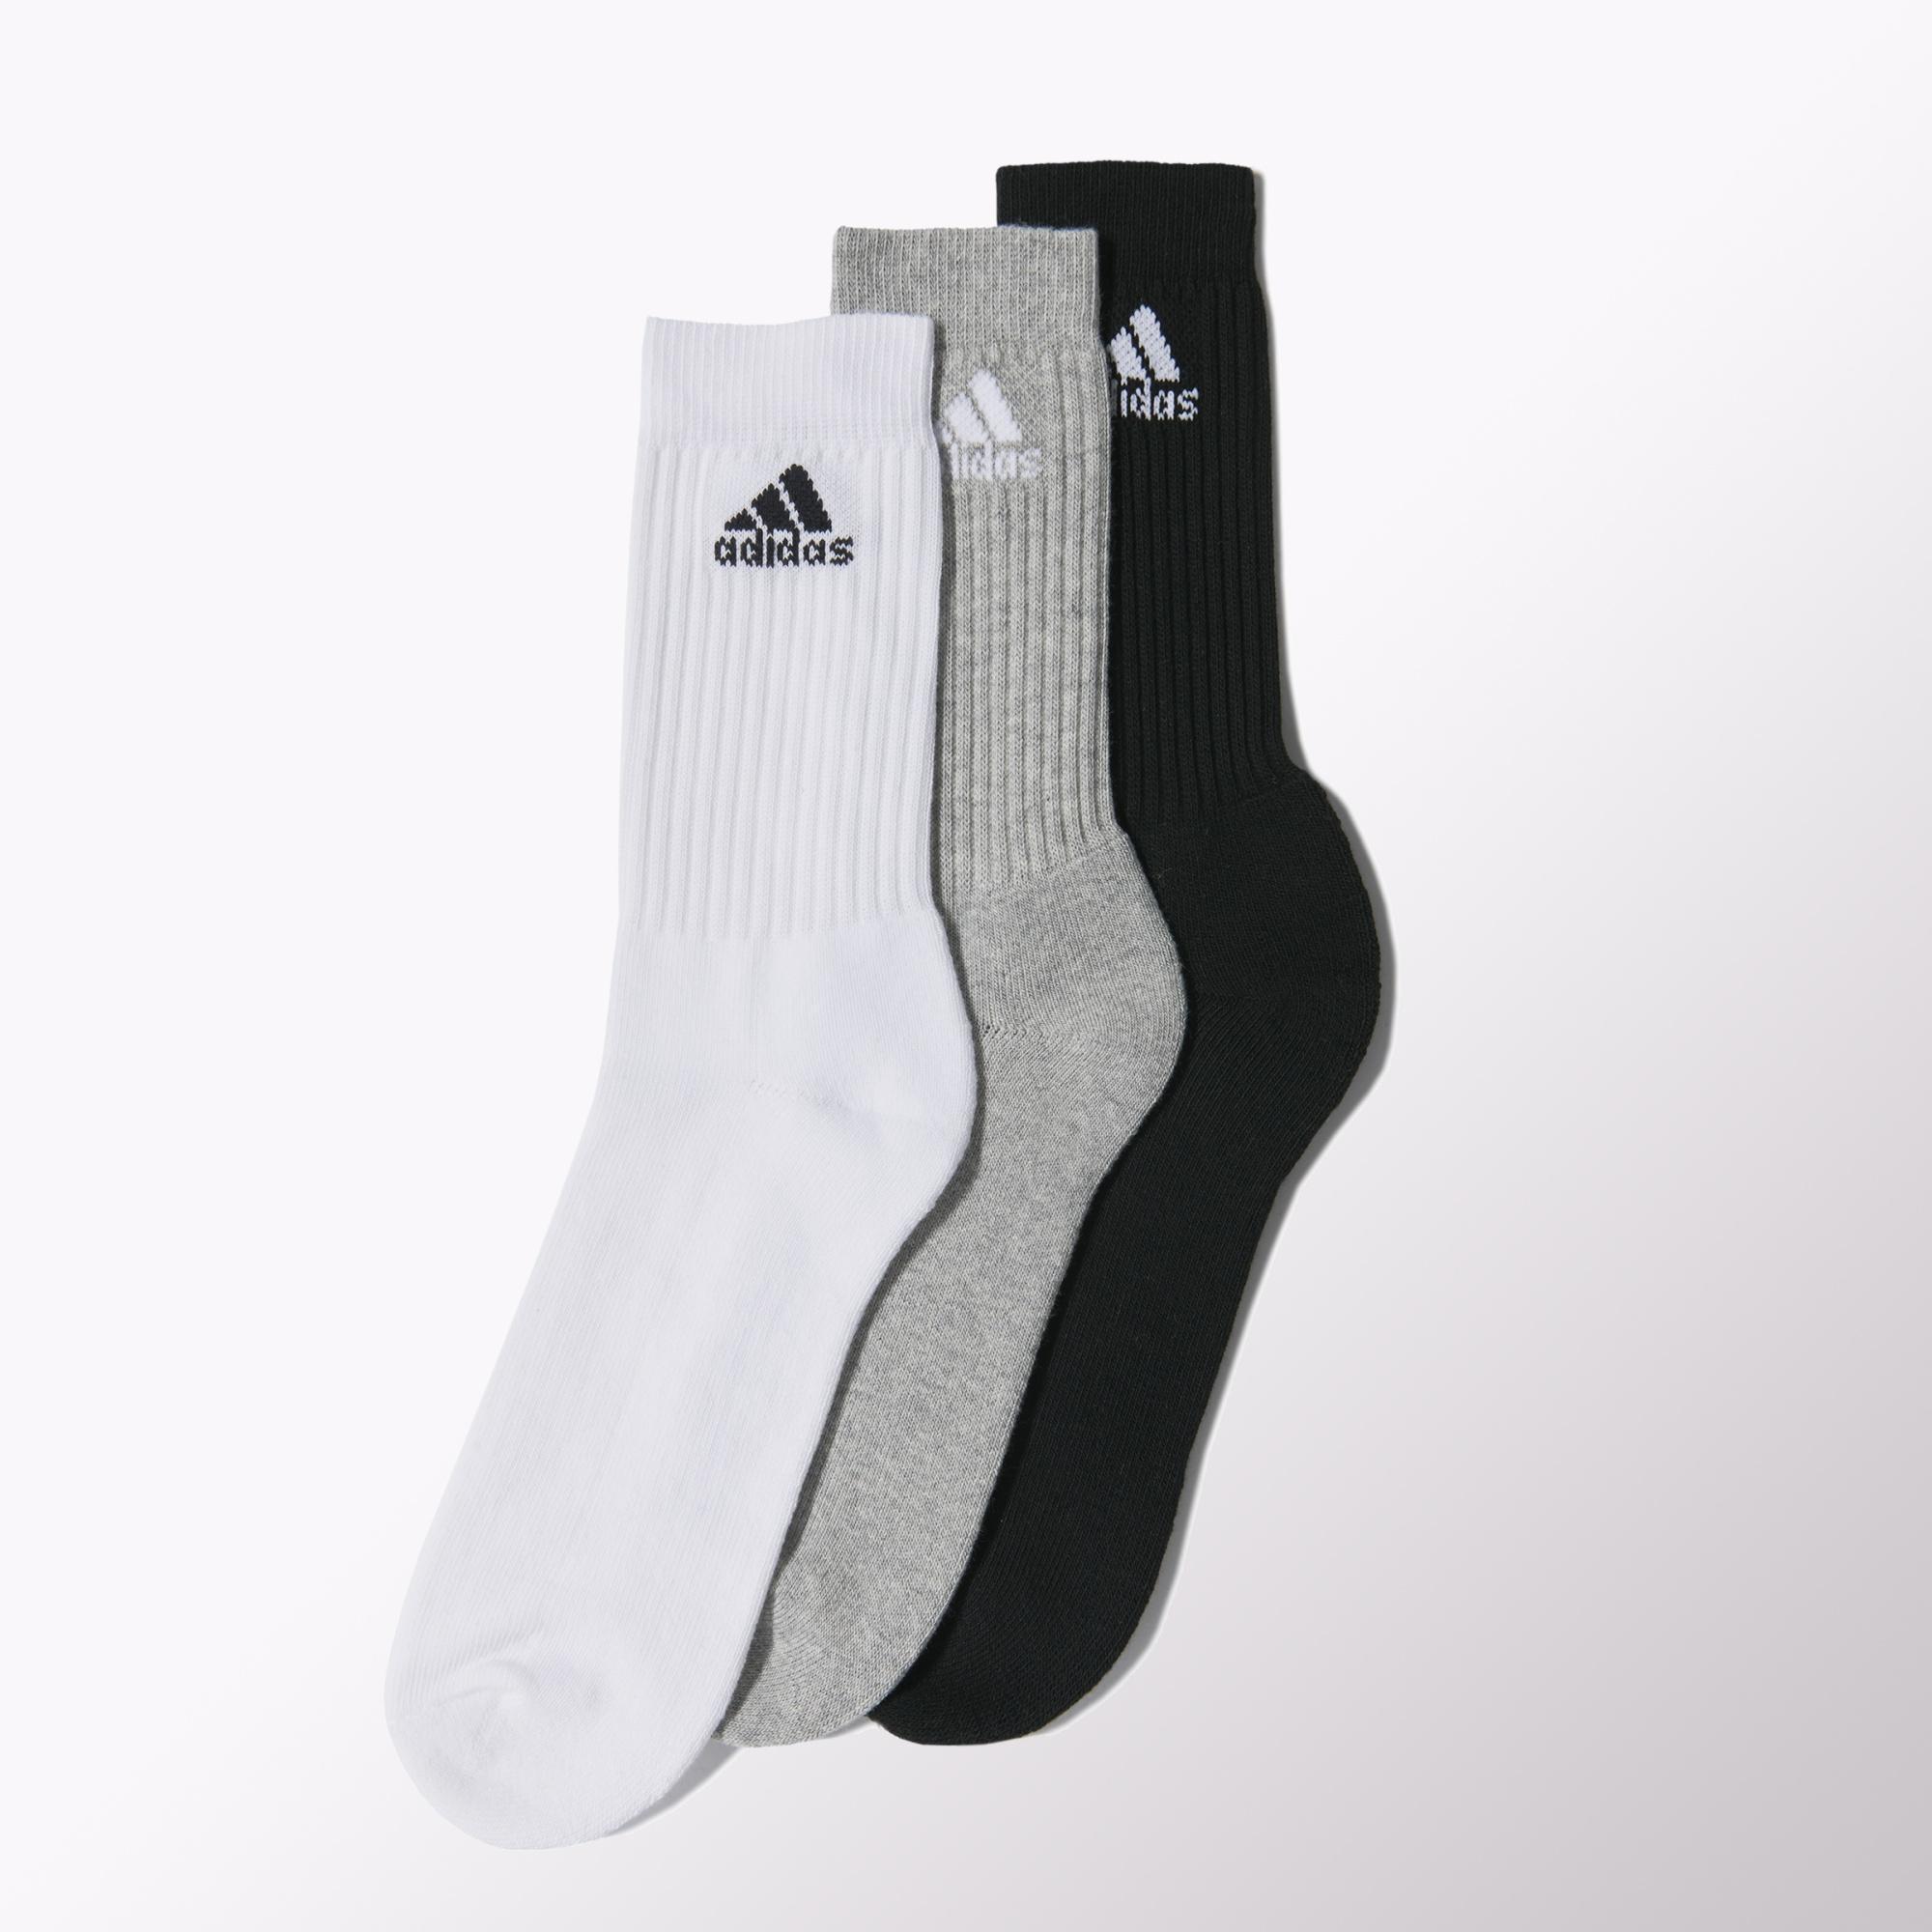 Adidas Half Cushion Crew Socks (3 Pack) - White/Grey/Black - Tennisnuts.com